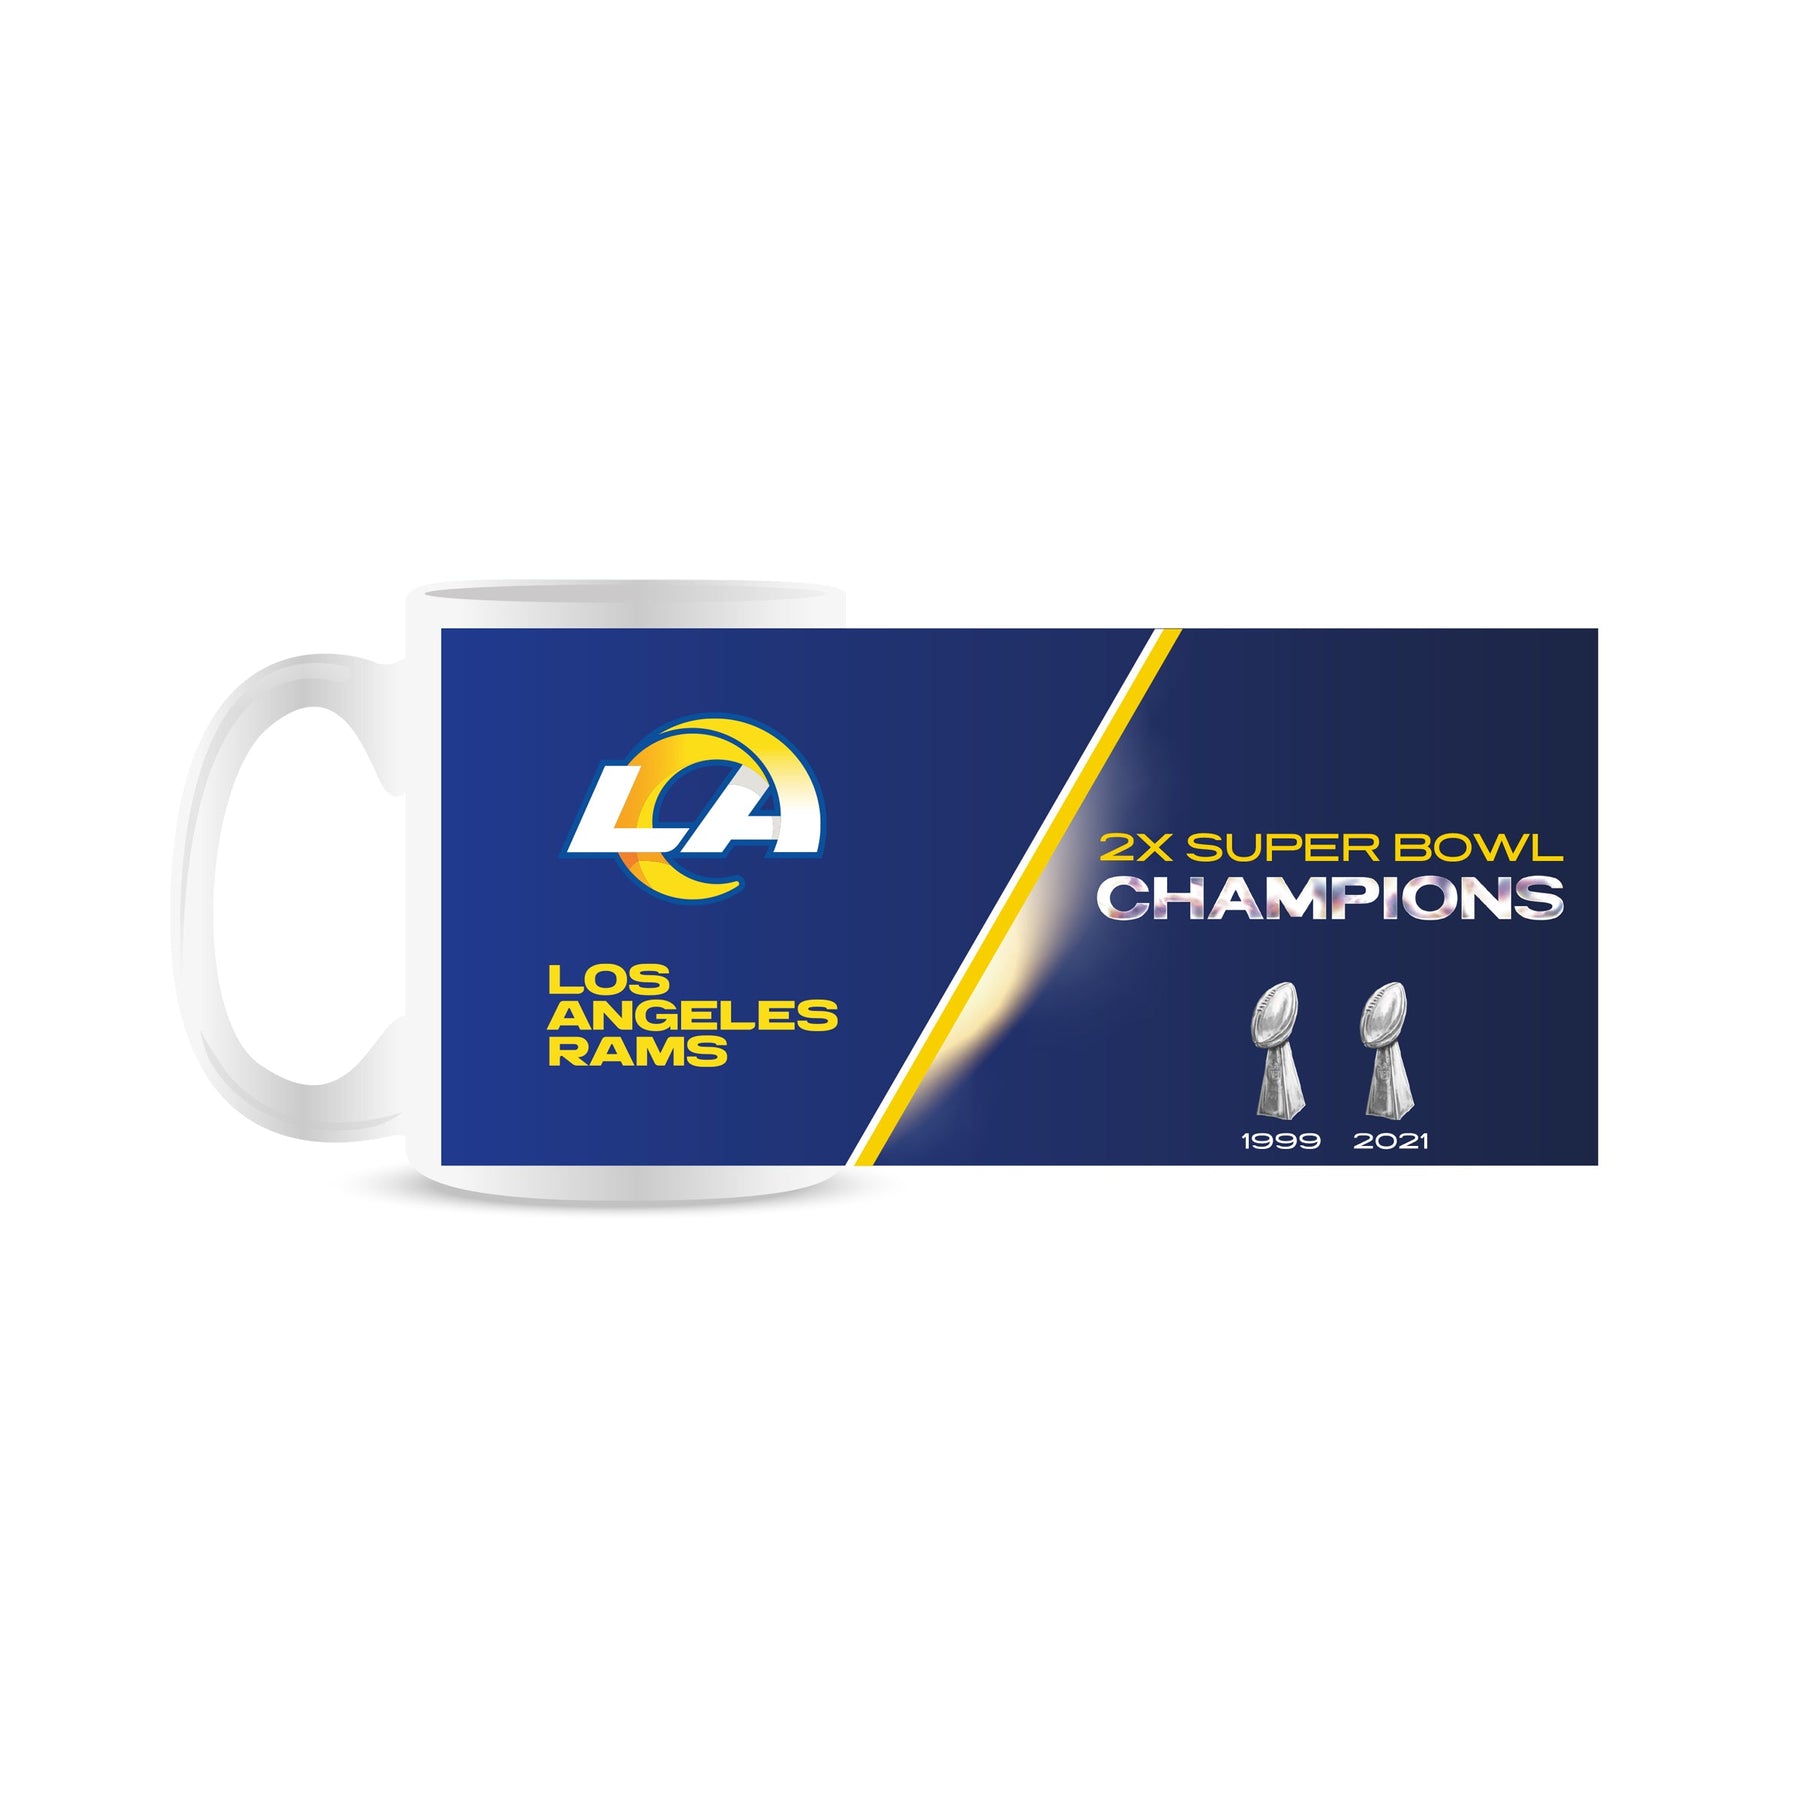 Los Angeles Rams Super Bowl 2x Winners Jumbo Mug (1999/2021)